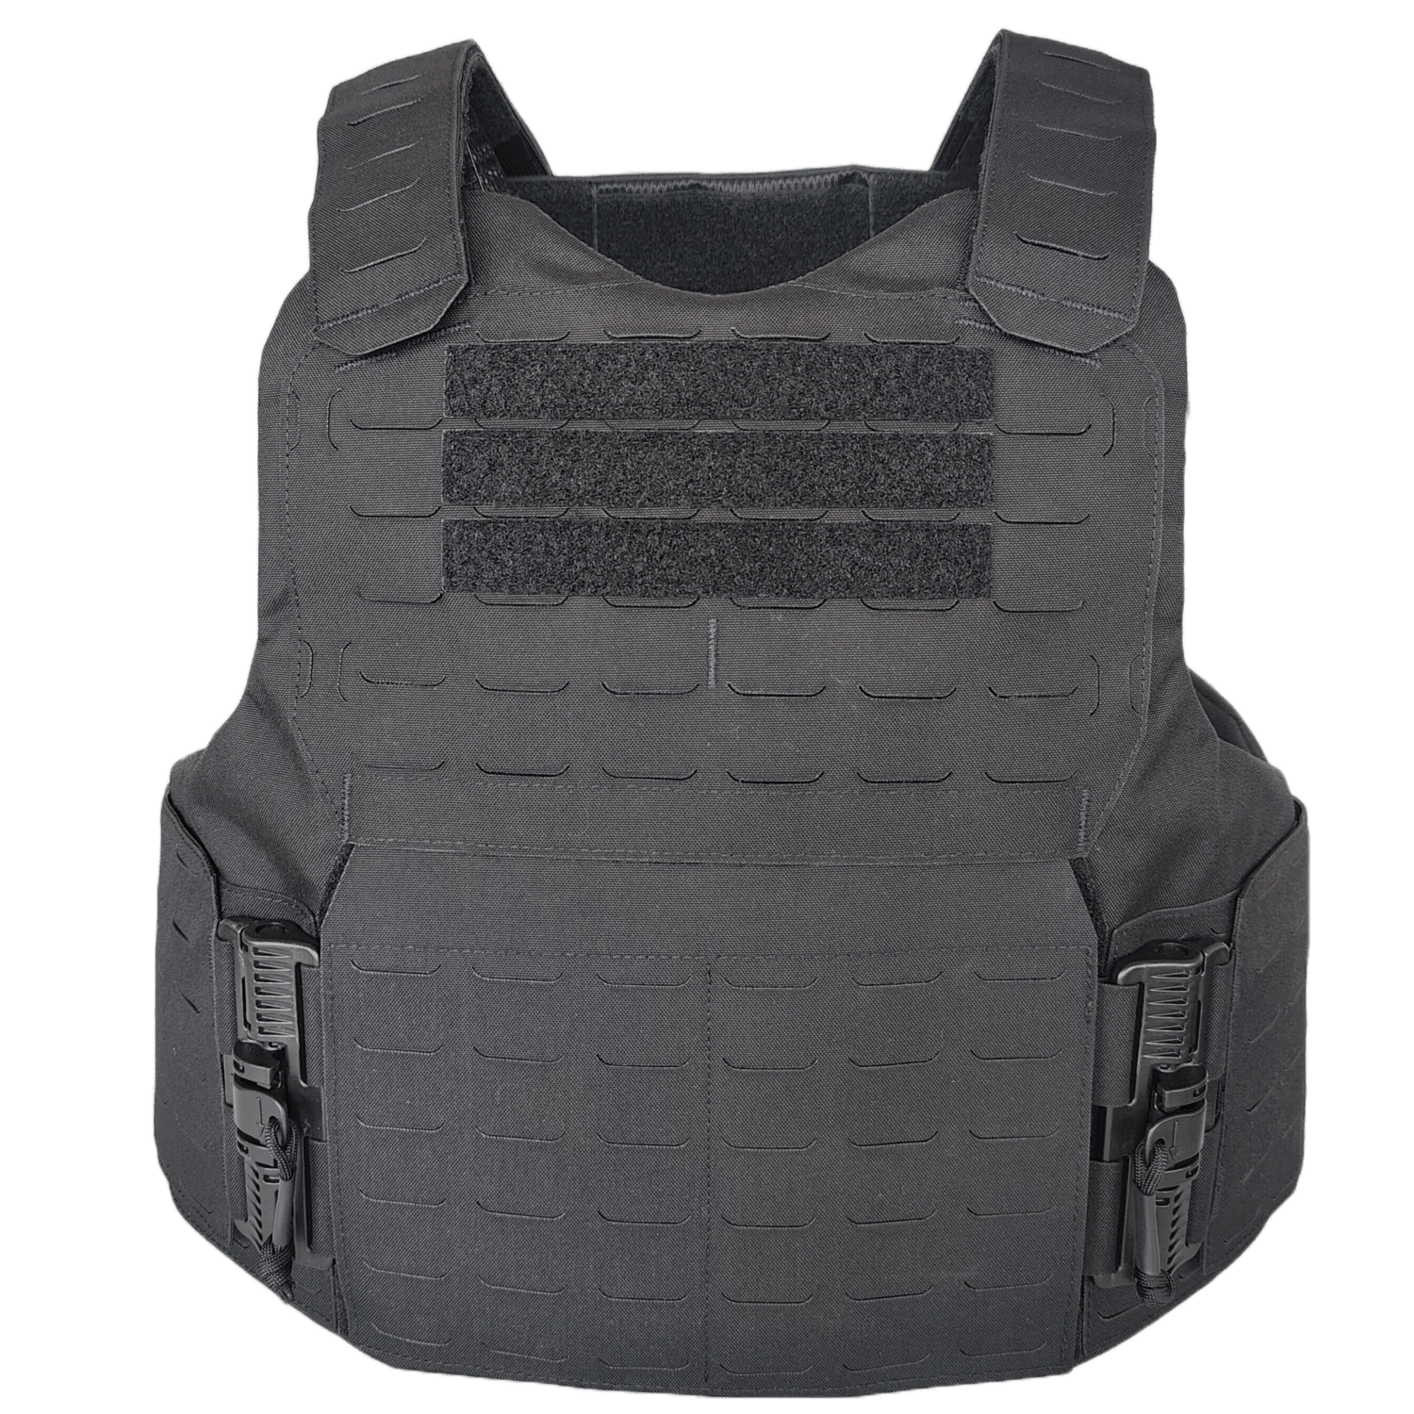 Tactical vest | Danish design | ProtectionGroup